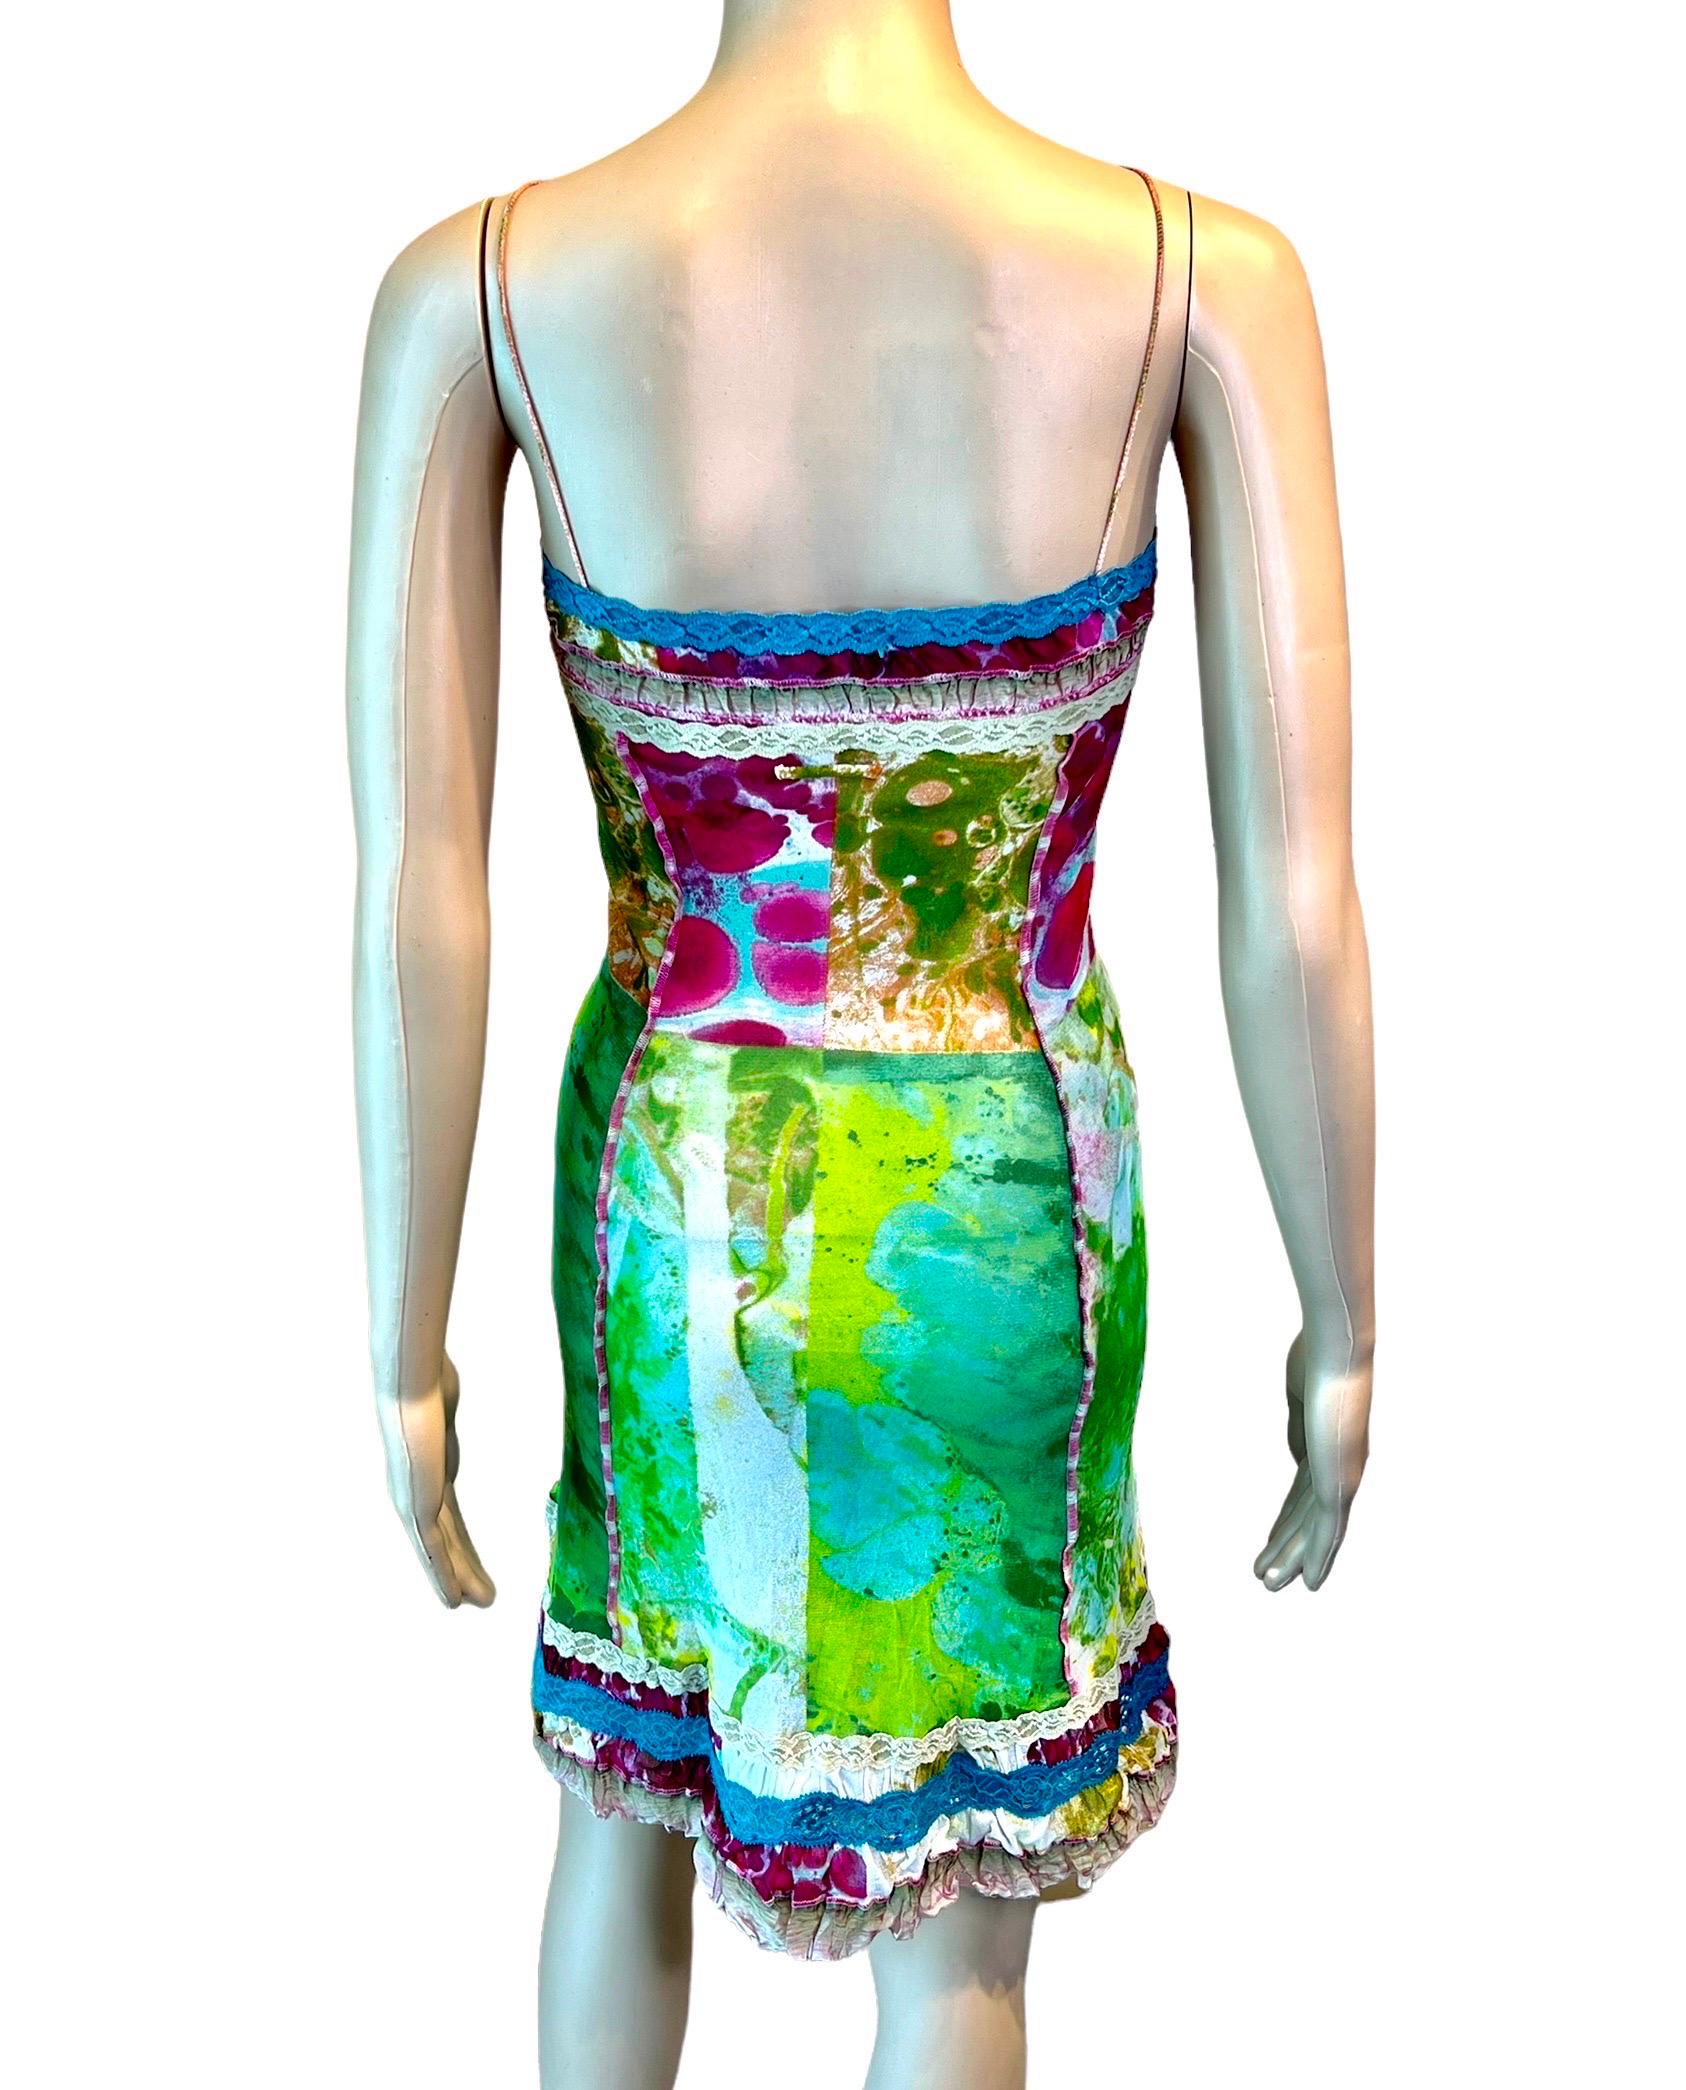 Jean Paul Gaultier S/S 2000 Psychedelic Bacteria Print Sheer Mesh Mini Dress  For Sale 2